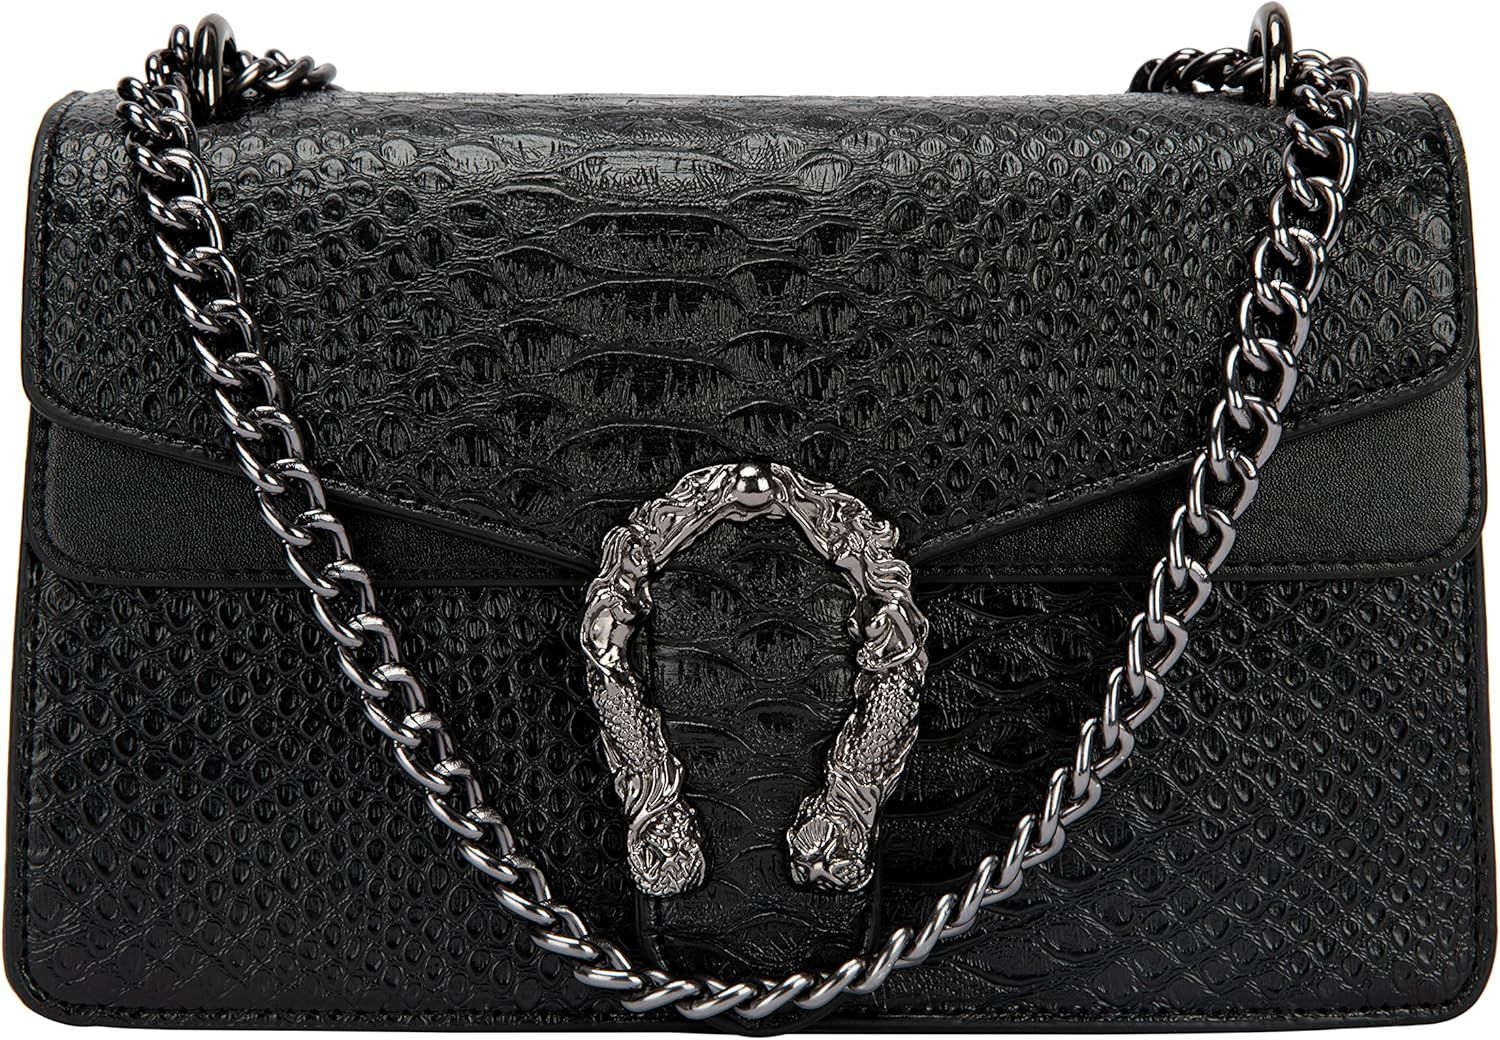 Crossbody Shoulder Square Purse For Women - Fashion Embossed Snake-Print Leather Handbag Metal Chain | Amazon (US)